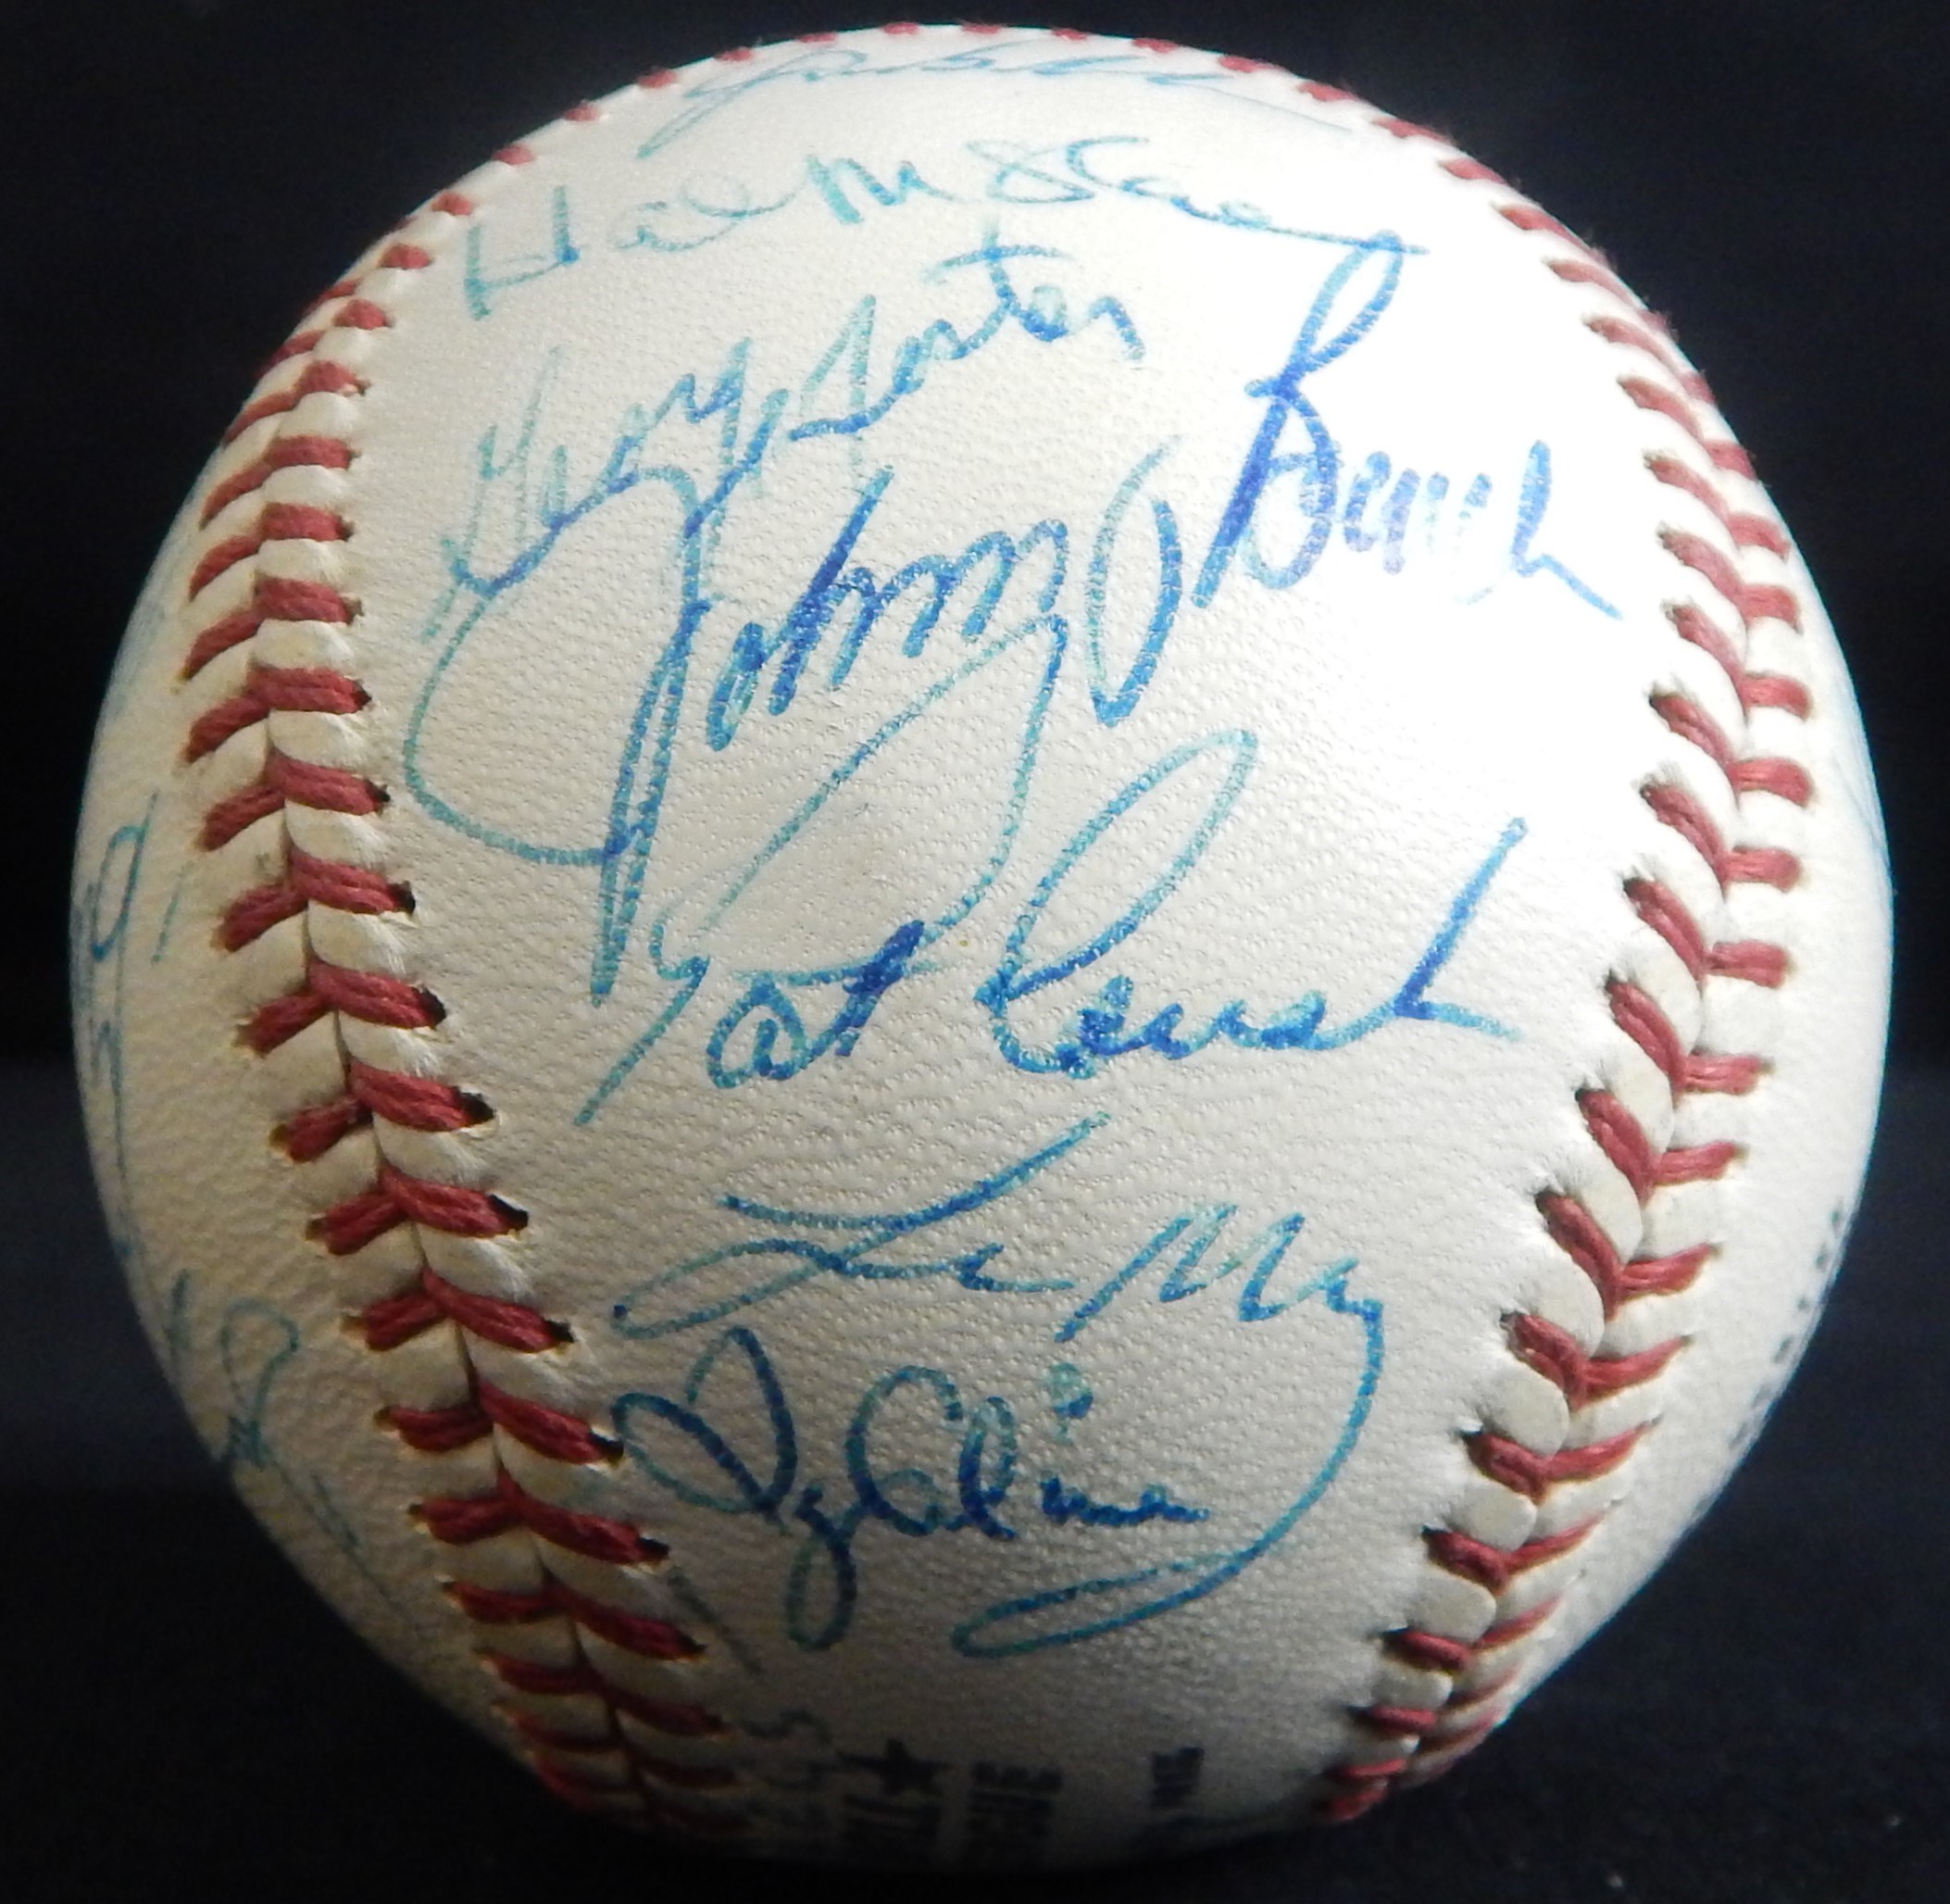 Baseball Autographs - 1971 Cincinnati Reds Team Signed Baseball (24 Signatures)